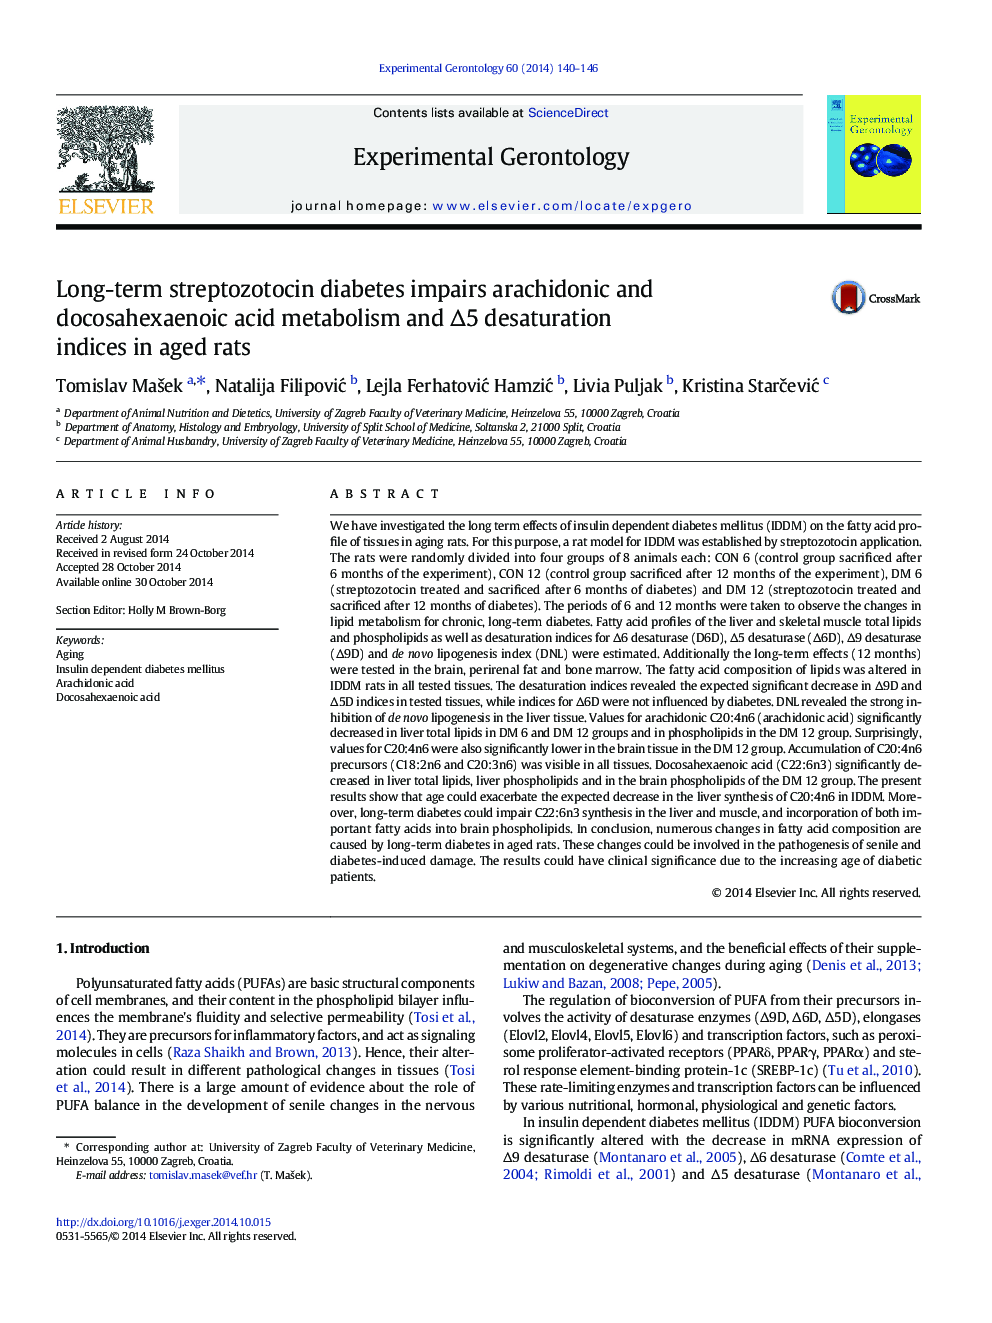 Long-term streptozotocin diabetes impairs arachidonic and docosahexaenoic acid metabolism and â5 desaturation indices in aged rats